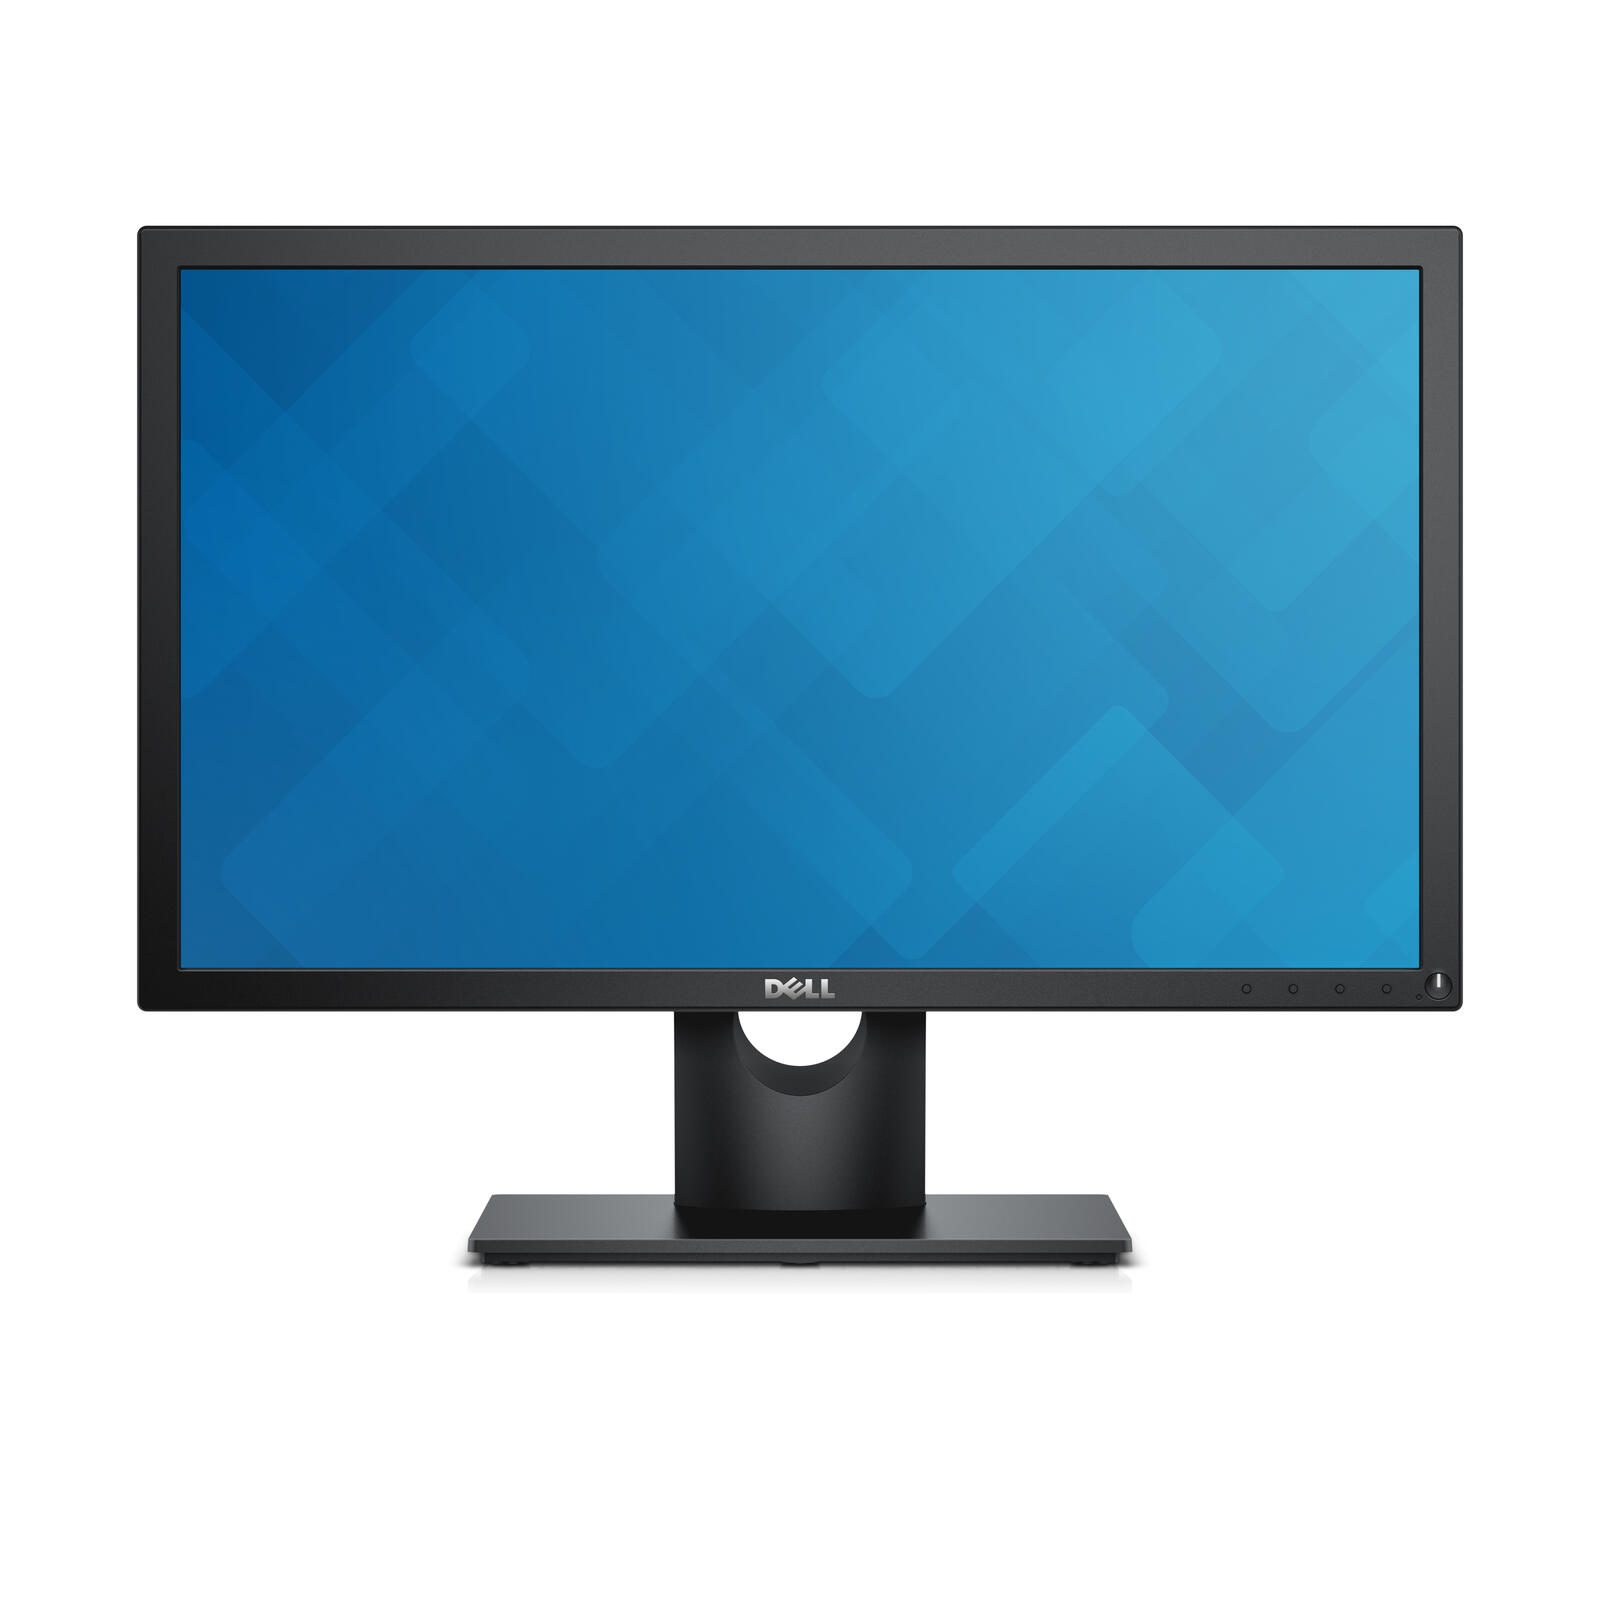 Dell E2216HV LED-Monitor (22") 55,9 cm (Full HD, 1920x1080,TN, 600:1, 5ms, VGA) monitors